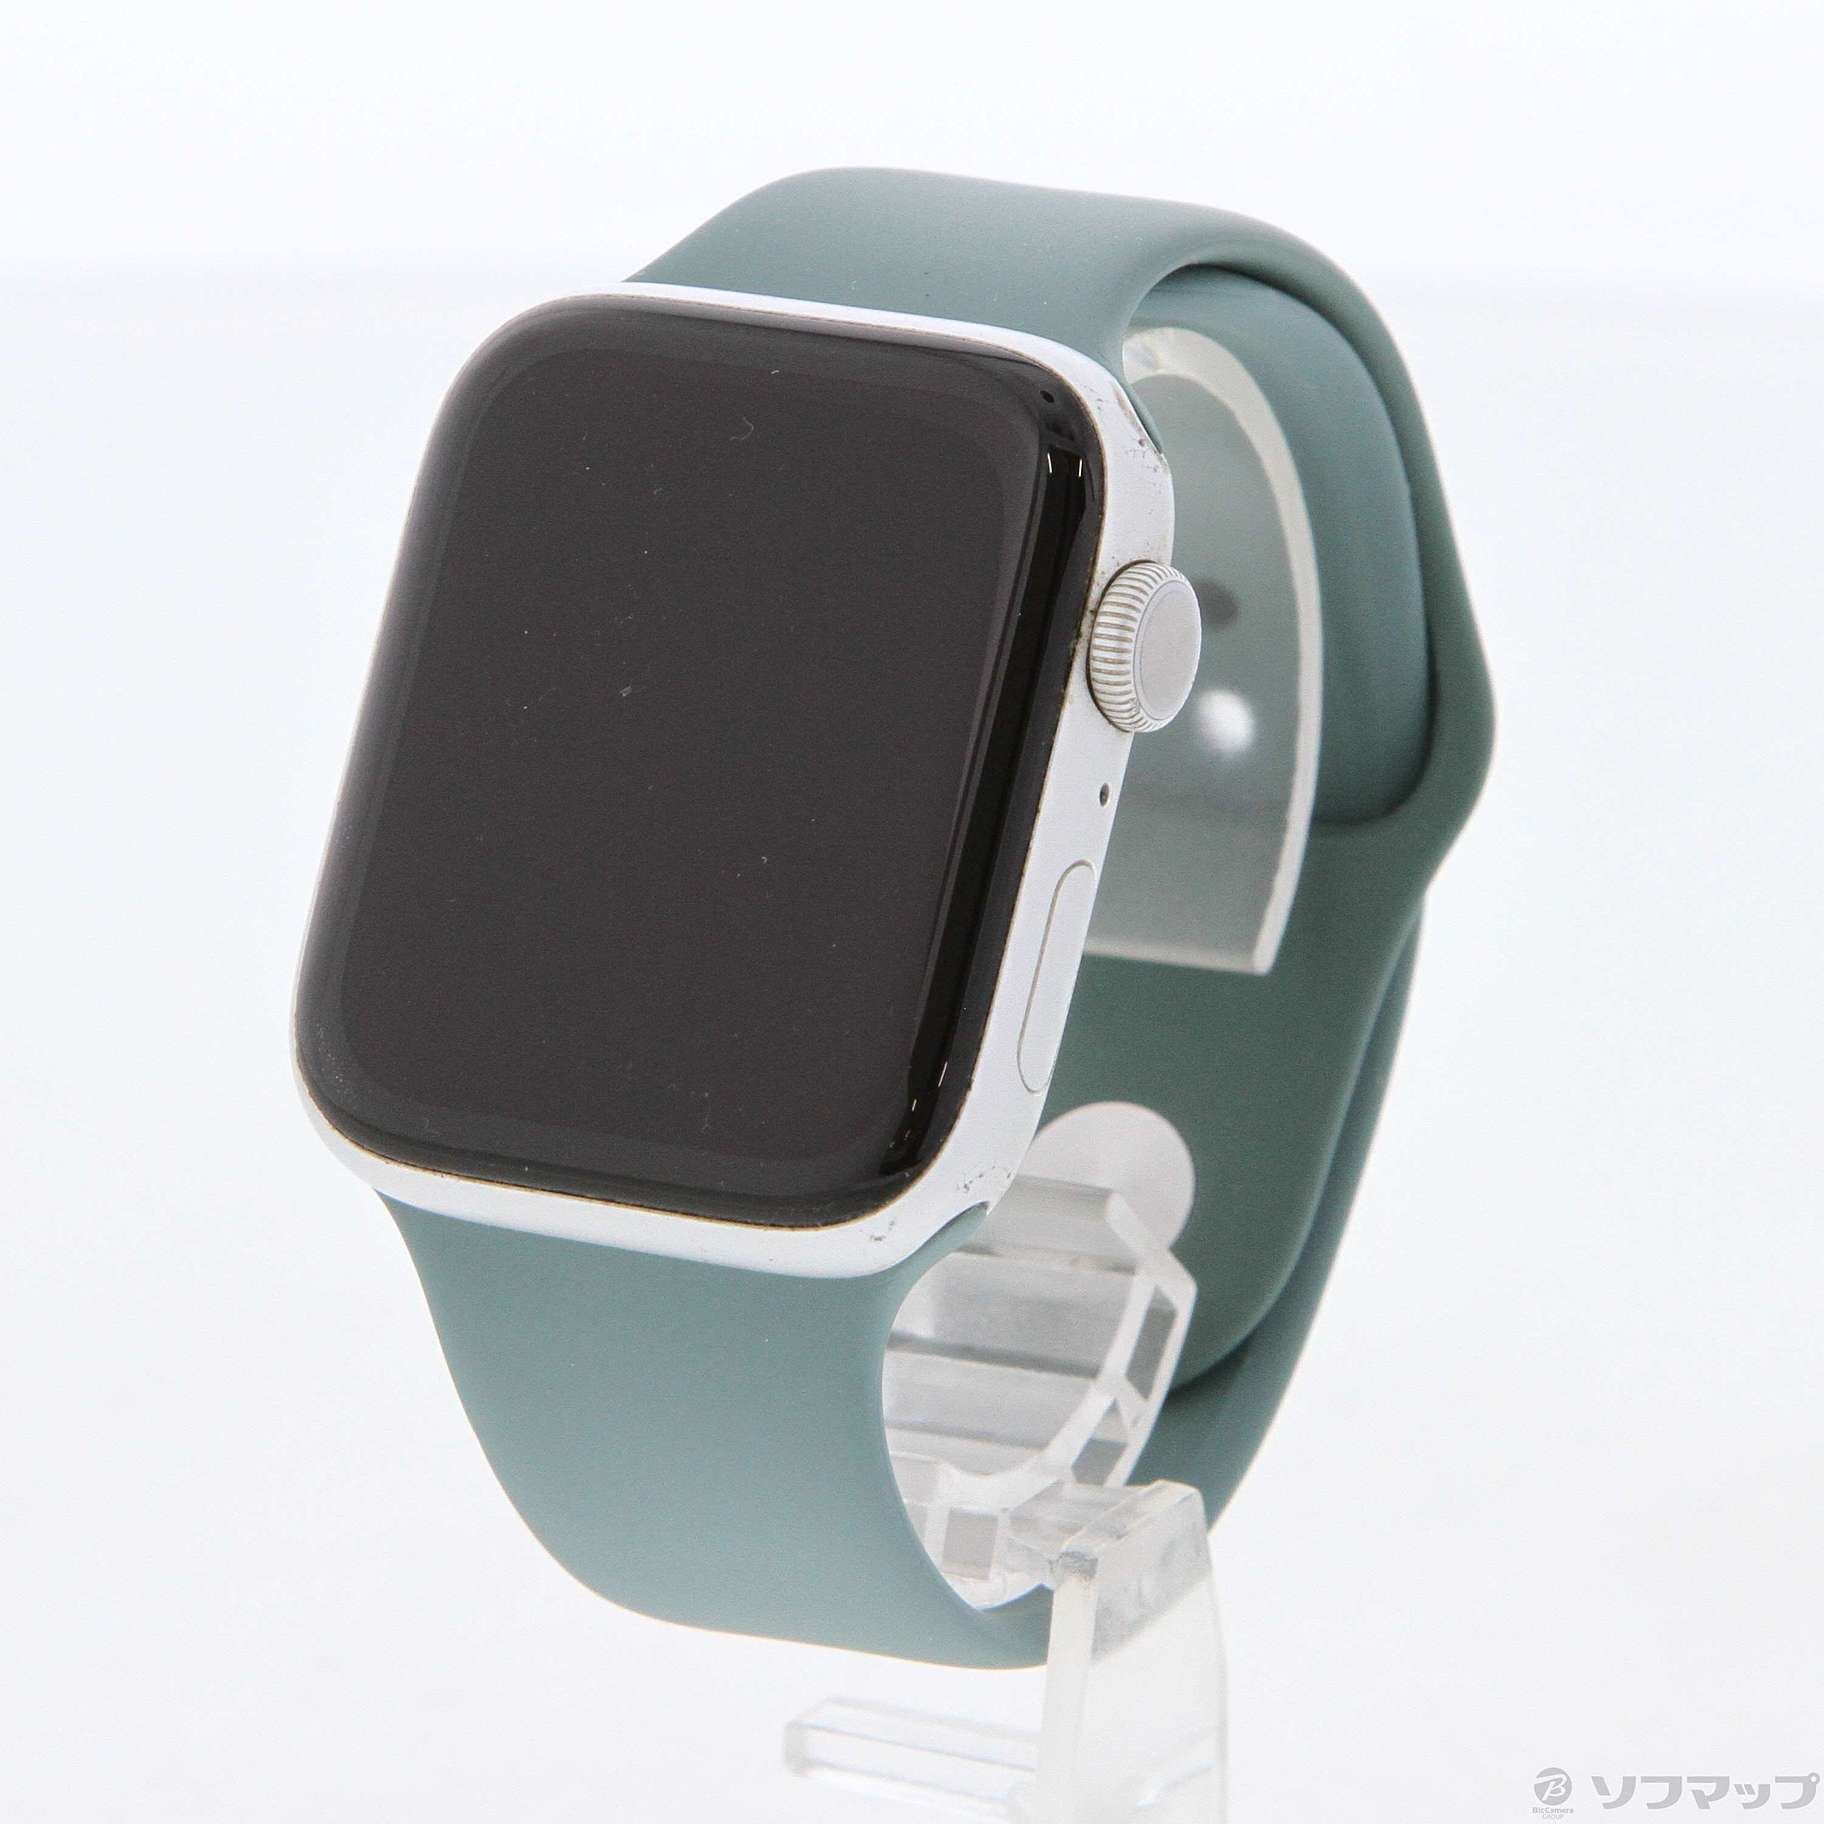 Apple Watch Series 5 - 44mm